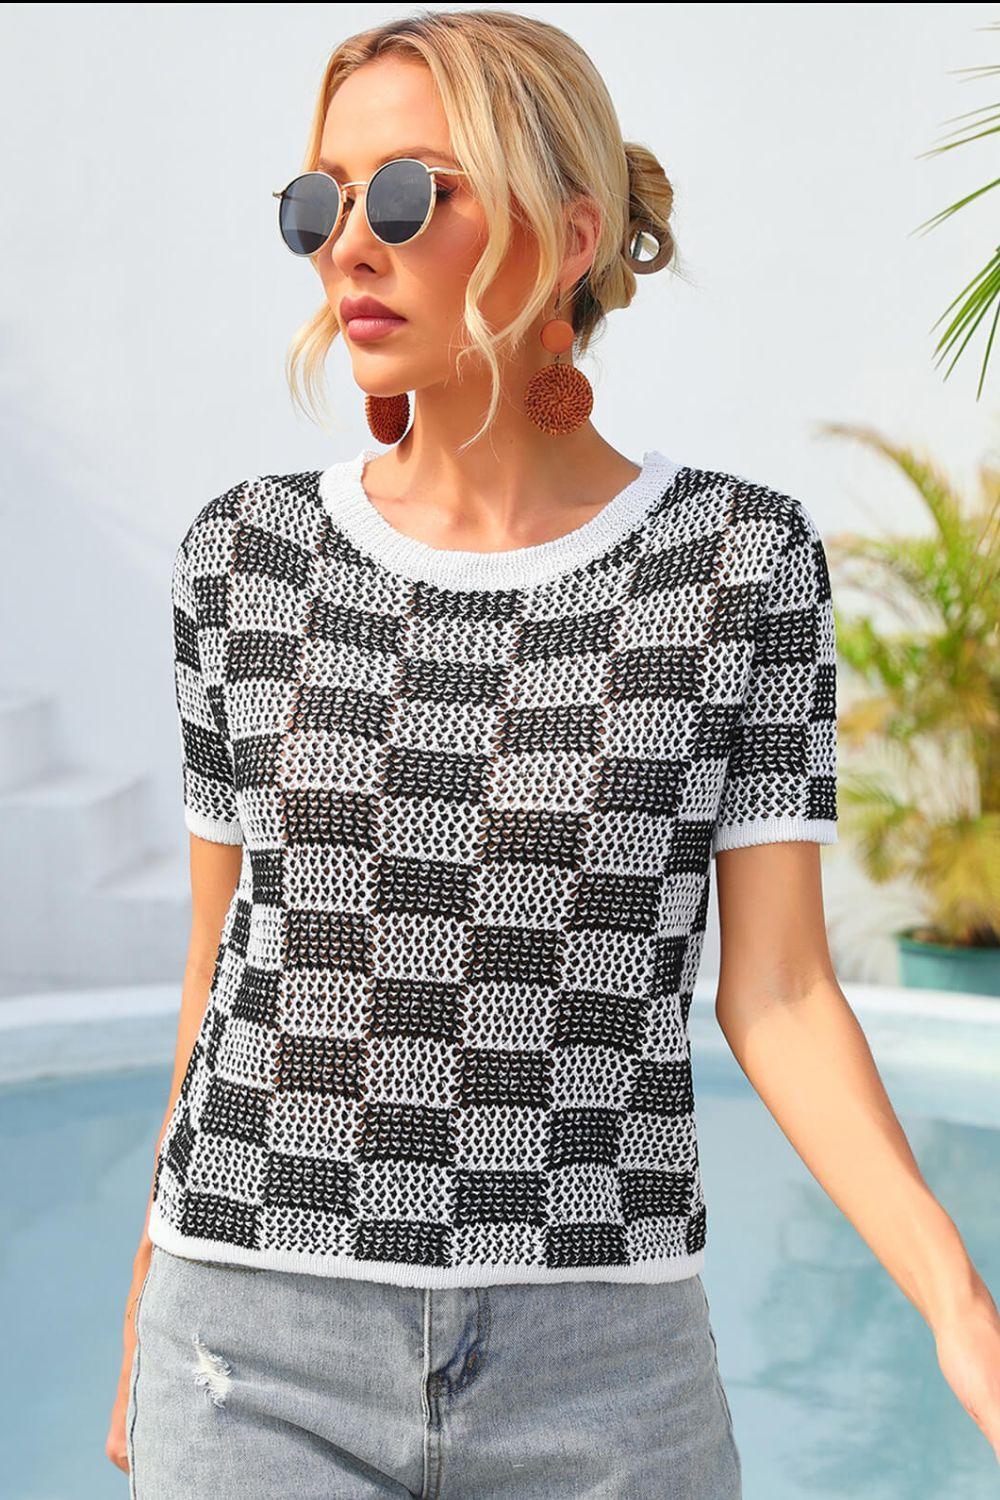 Cheer Up Checkered Knit T-Shirt - MXSTUDIO.COM